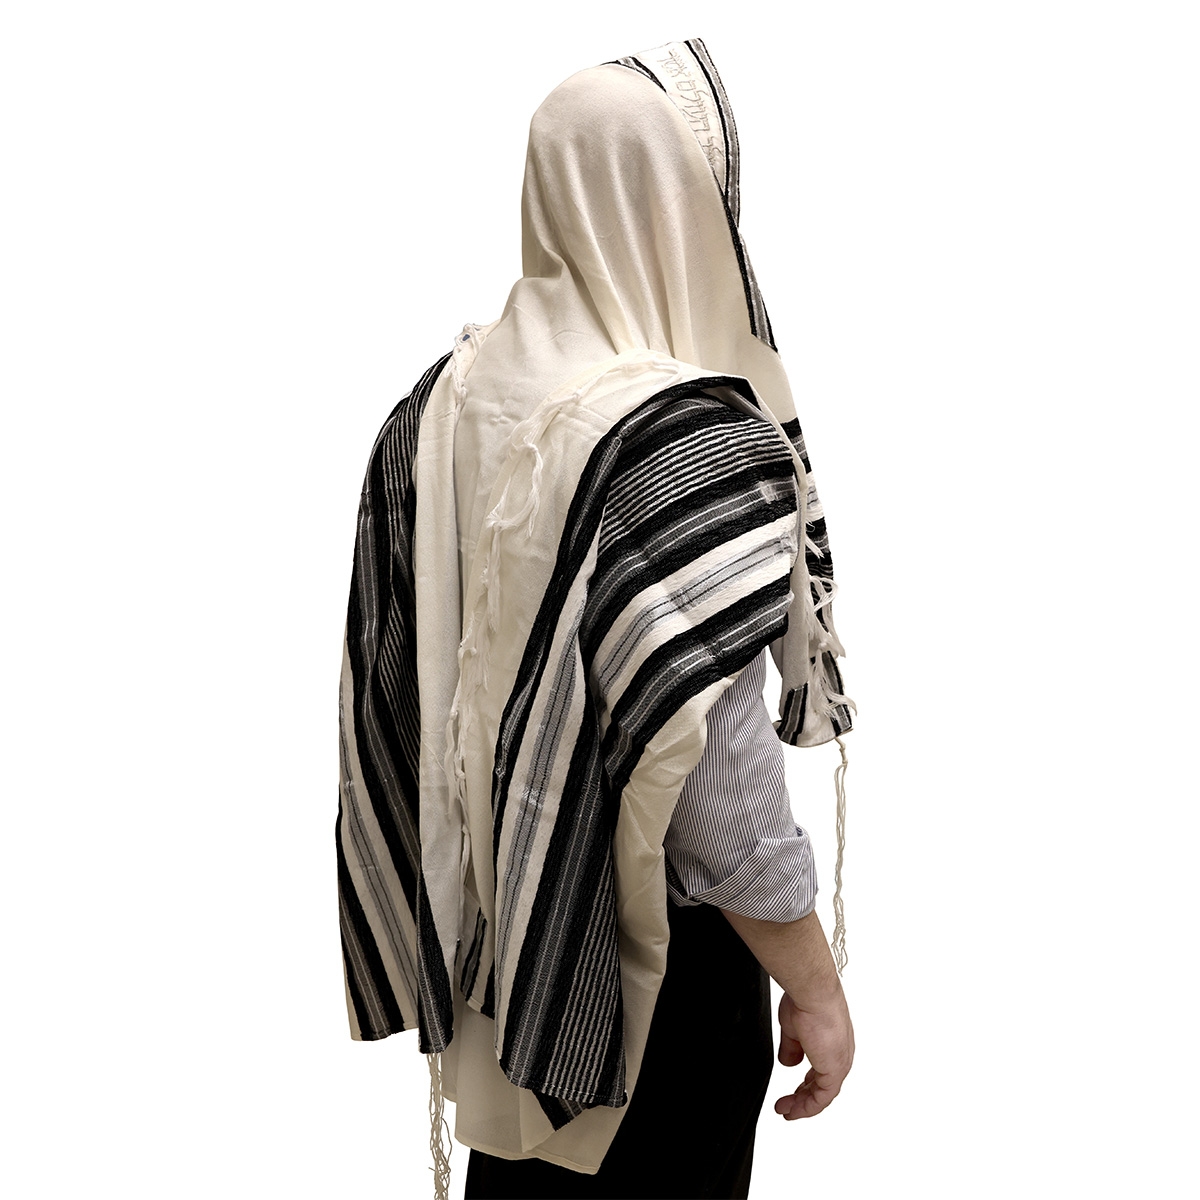 Handwoven Black & Silver Pattern Non-Slip Tallit (Prayer Shawl) Set from Rikmat Elimelech - 1